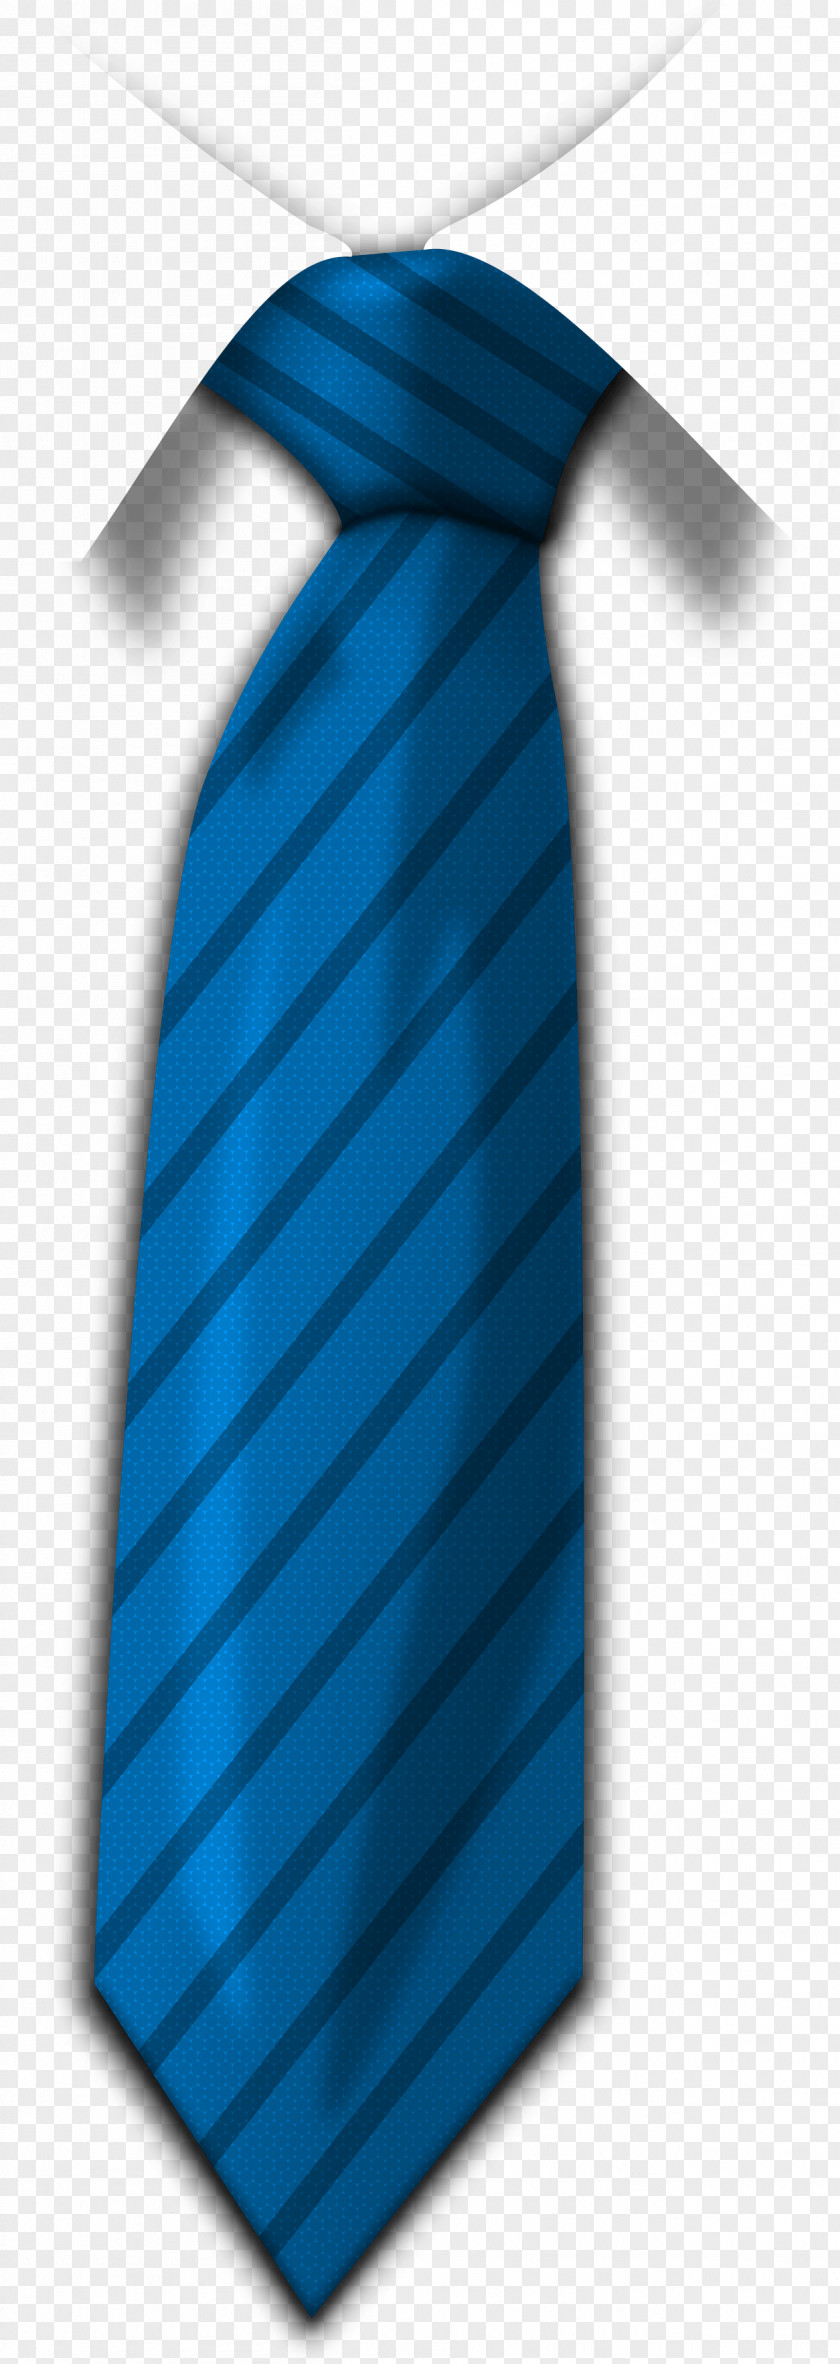 Blue Tie Image Necktie Bow PNG